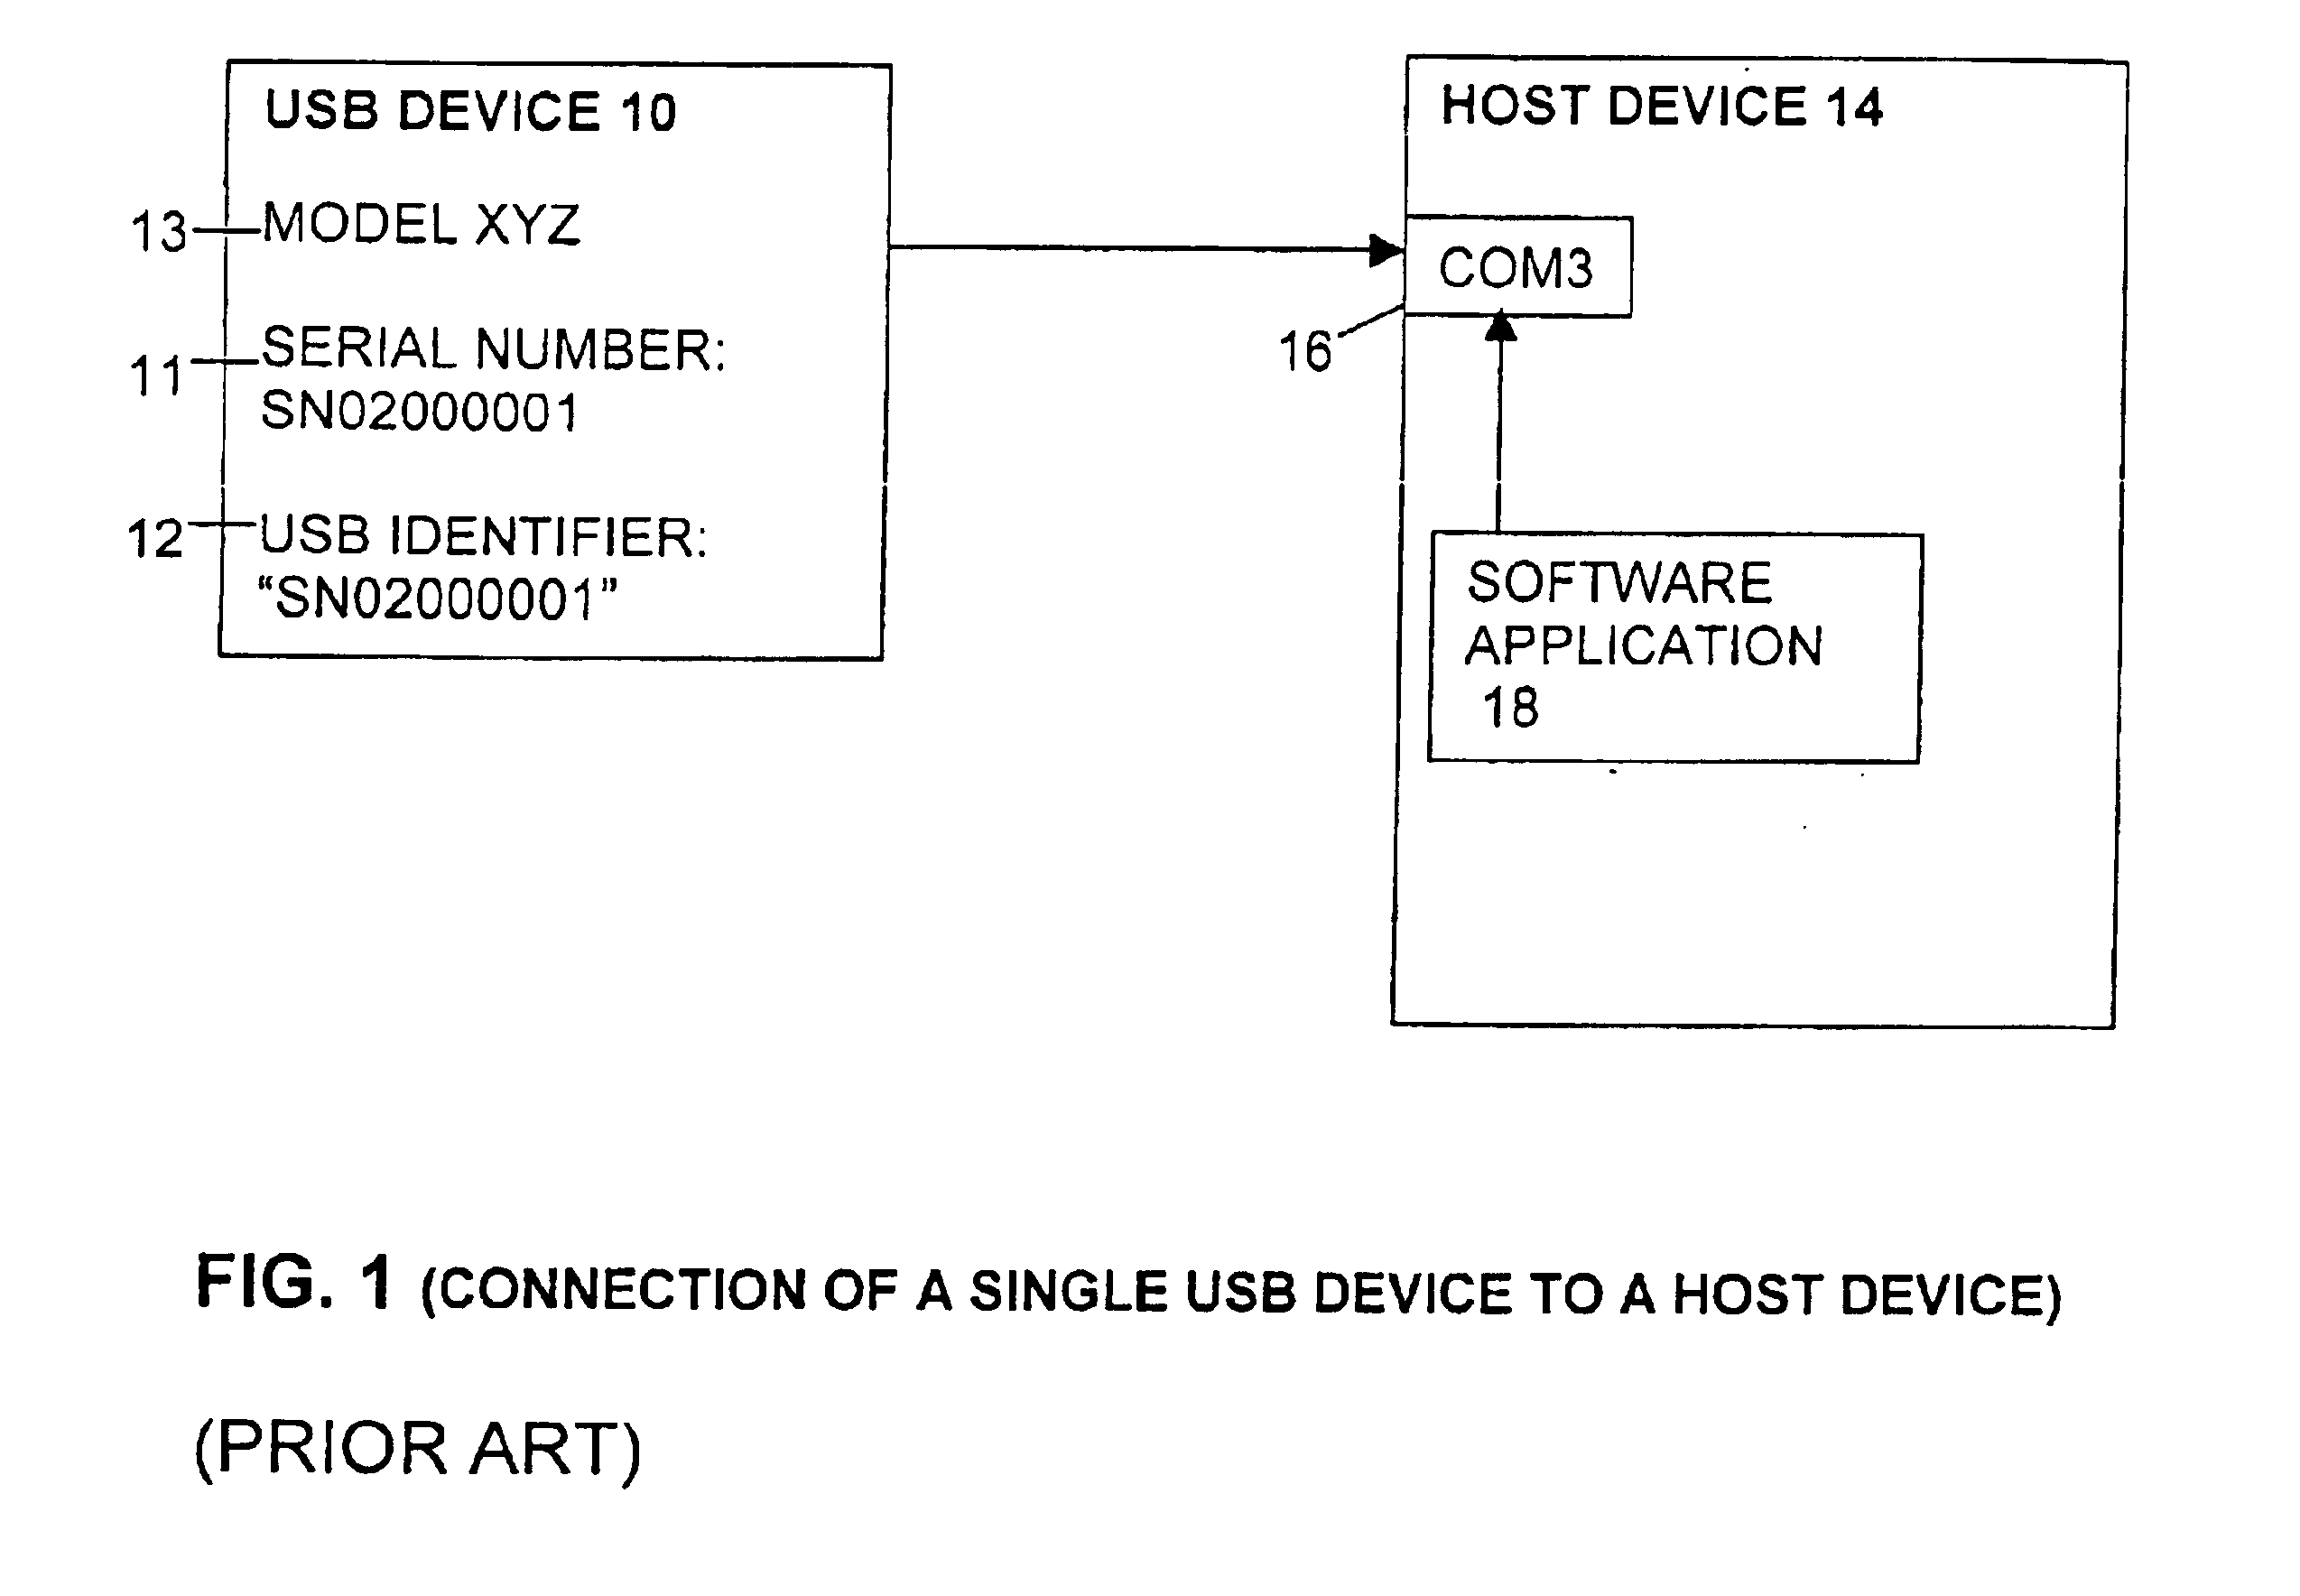 Standard configurable universal serial bus (USB) device identifier